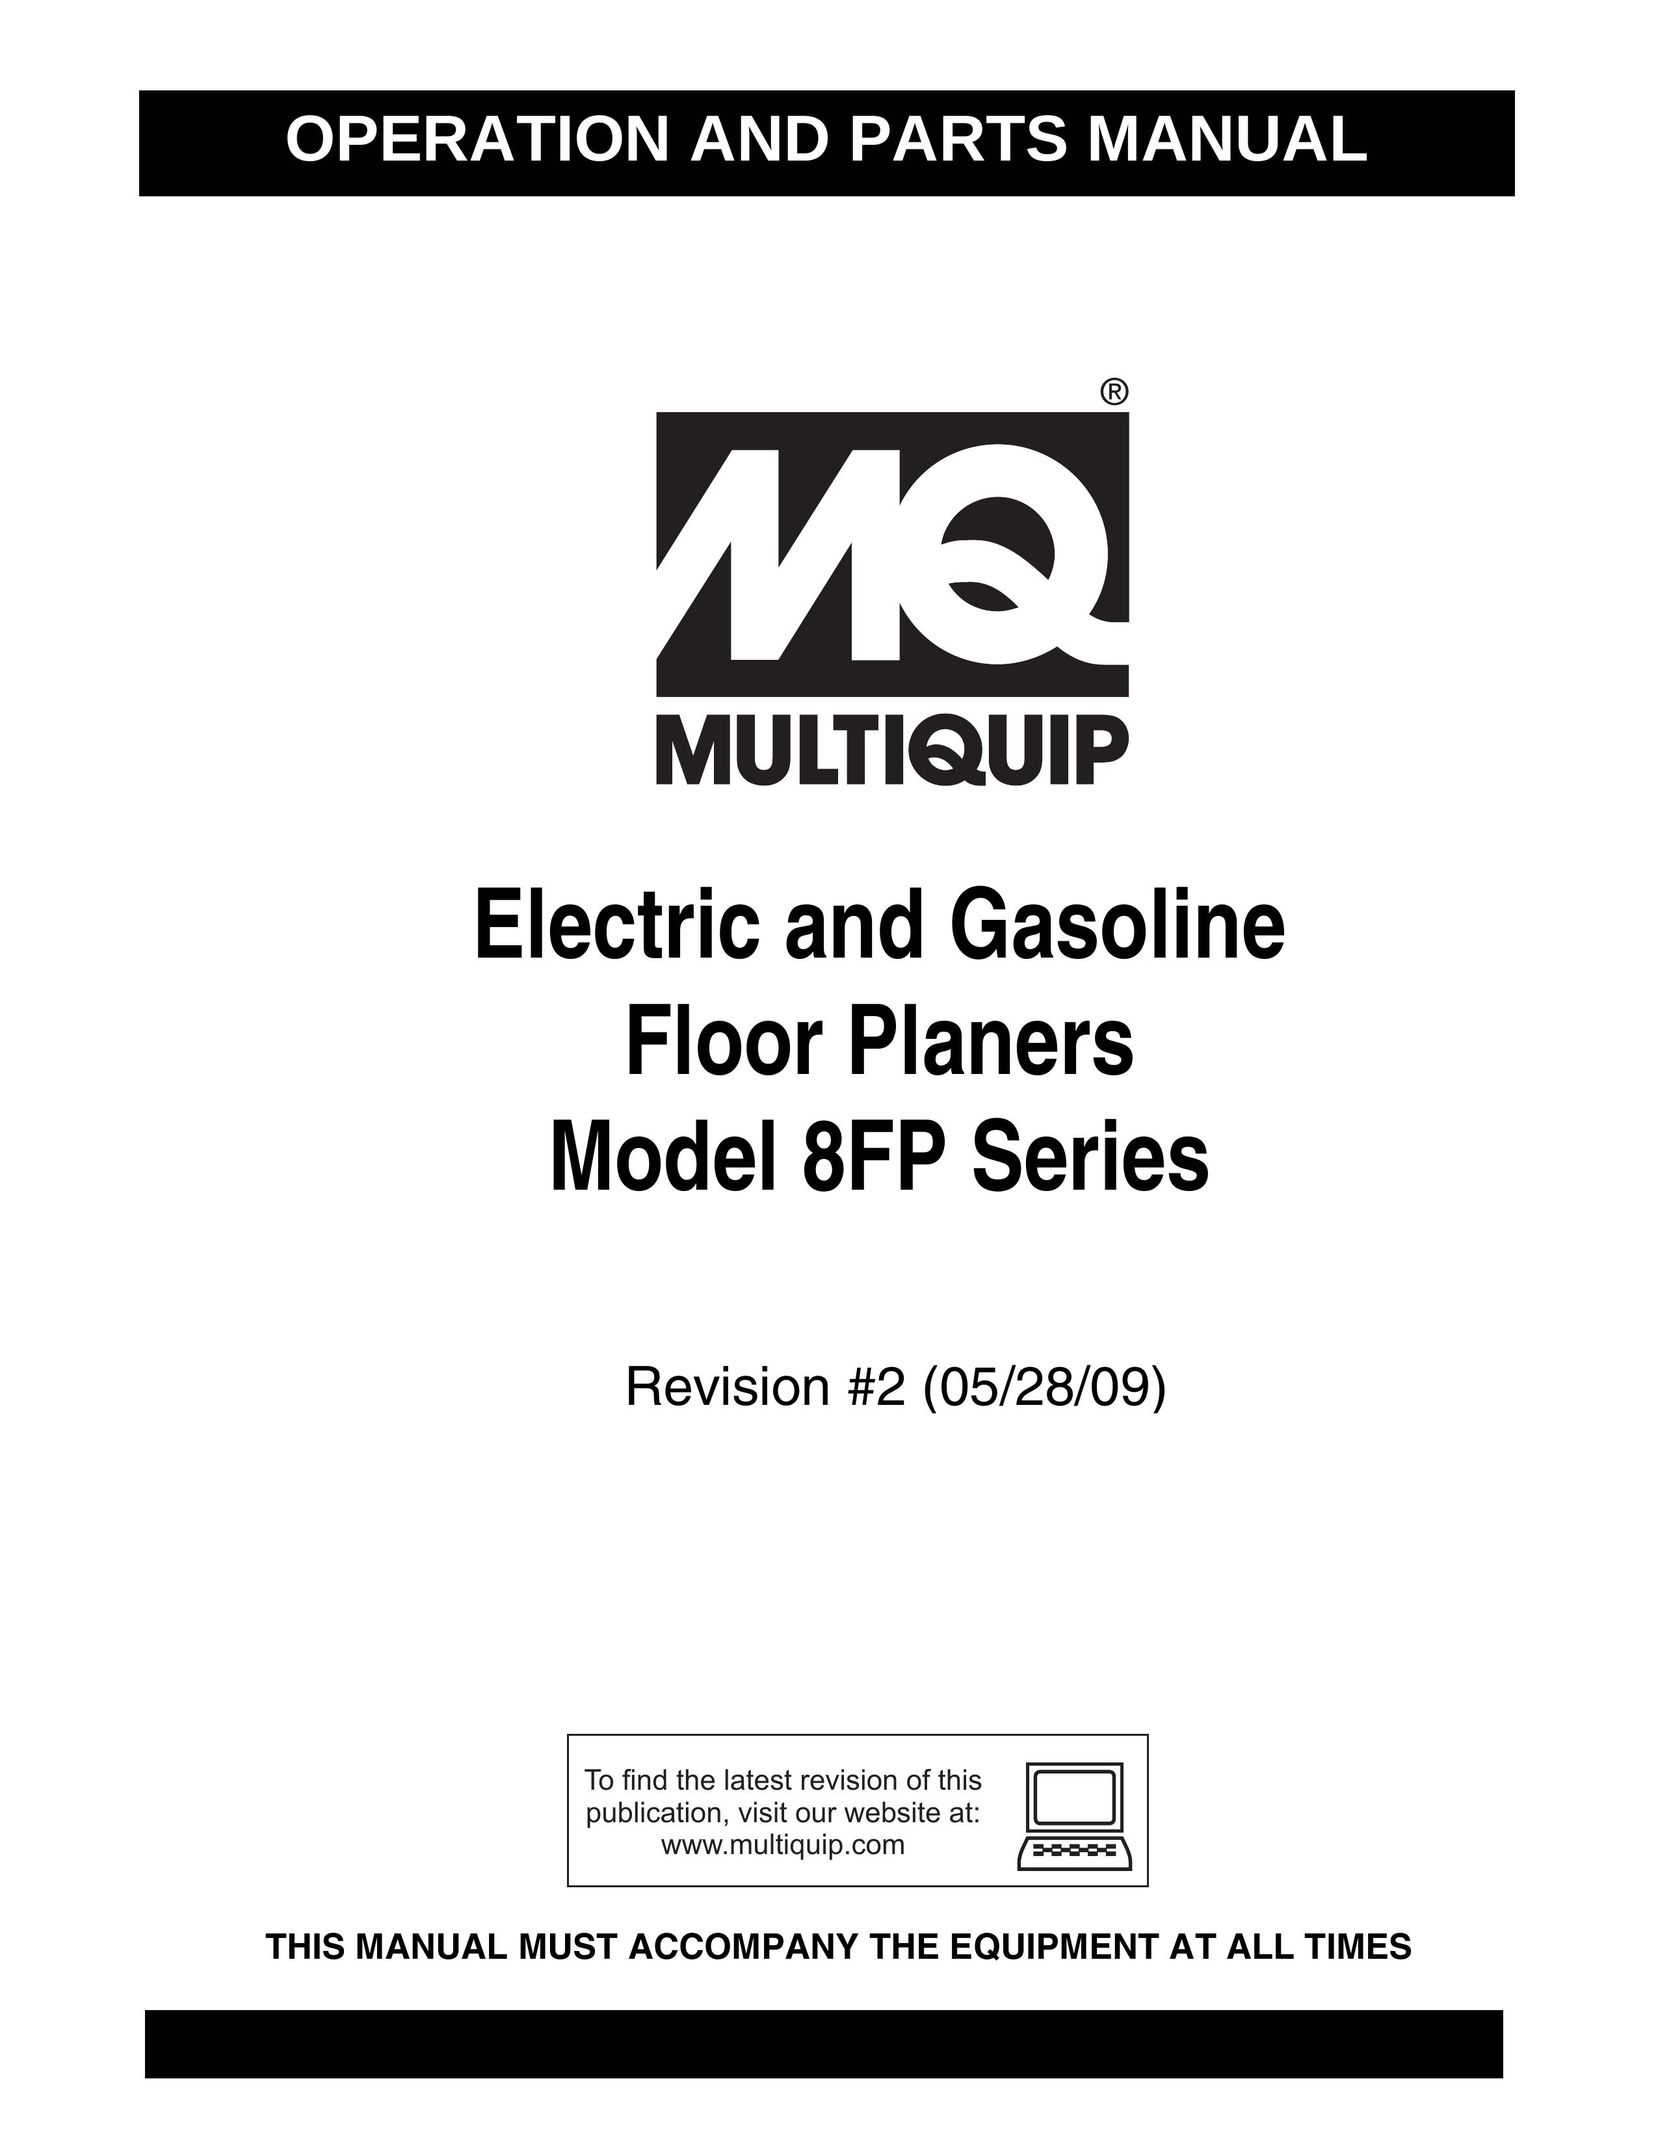 Multiquip 8FP Series Planer User Manual